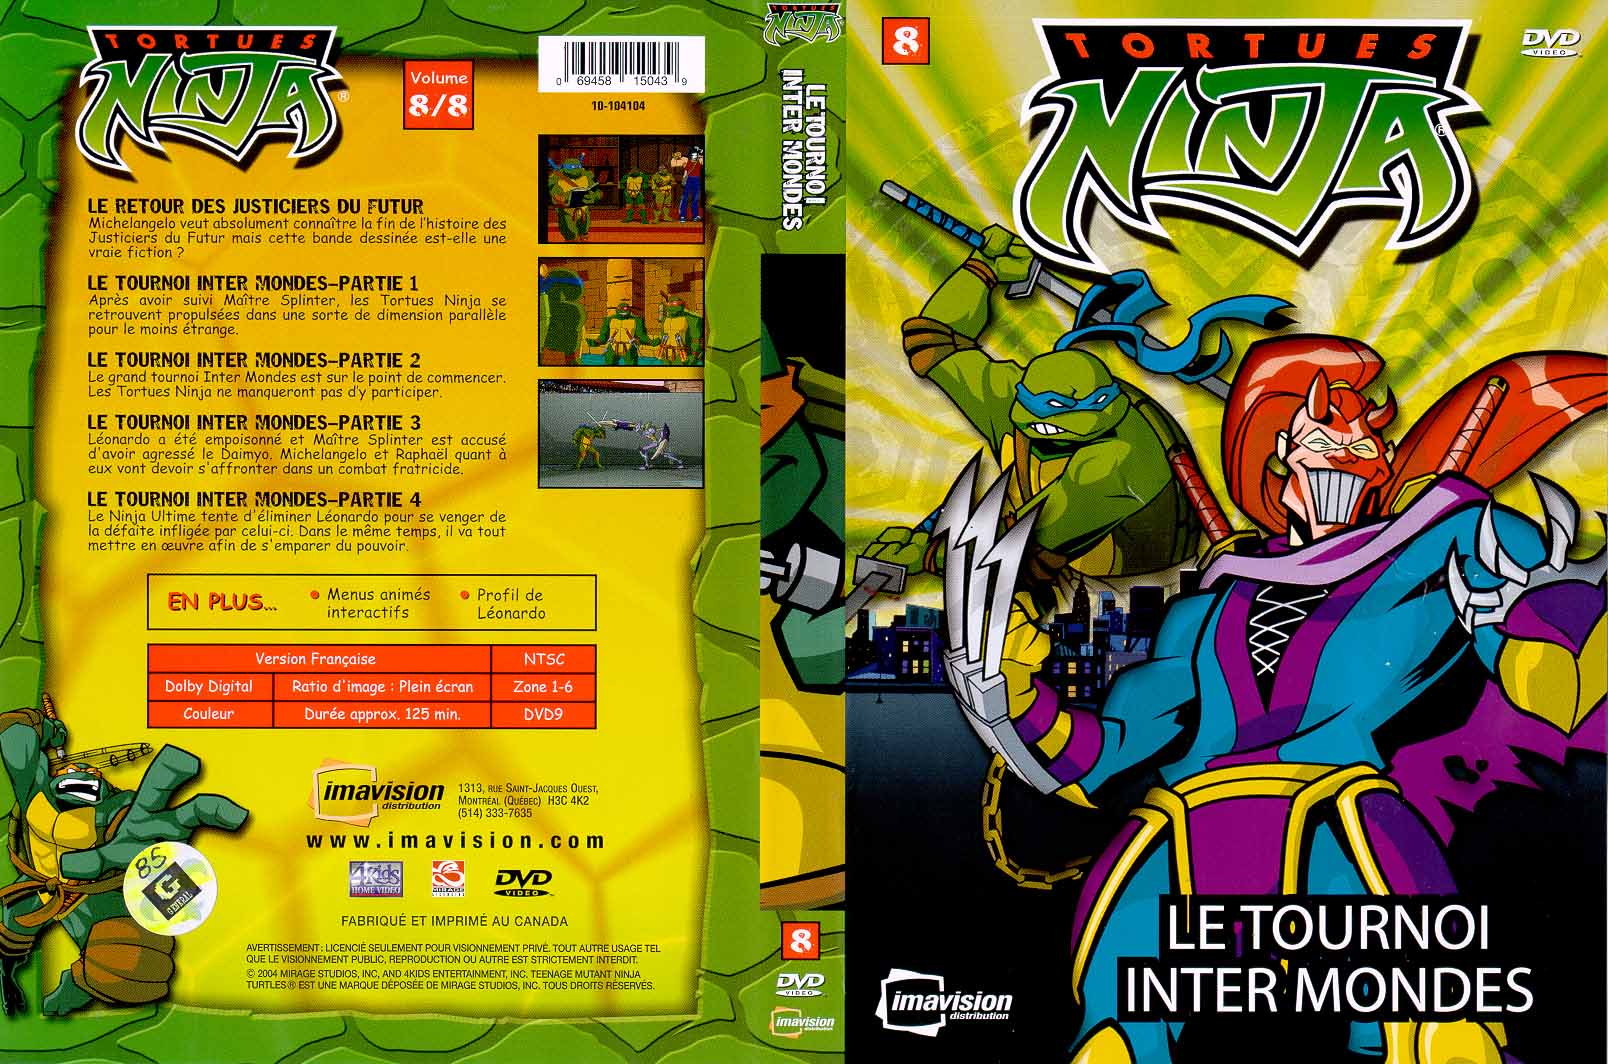 Jaquette DVD Tortues Ninja vol 8